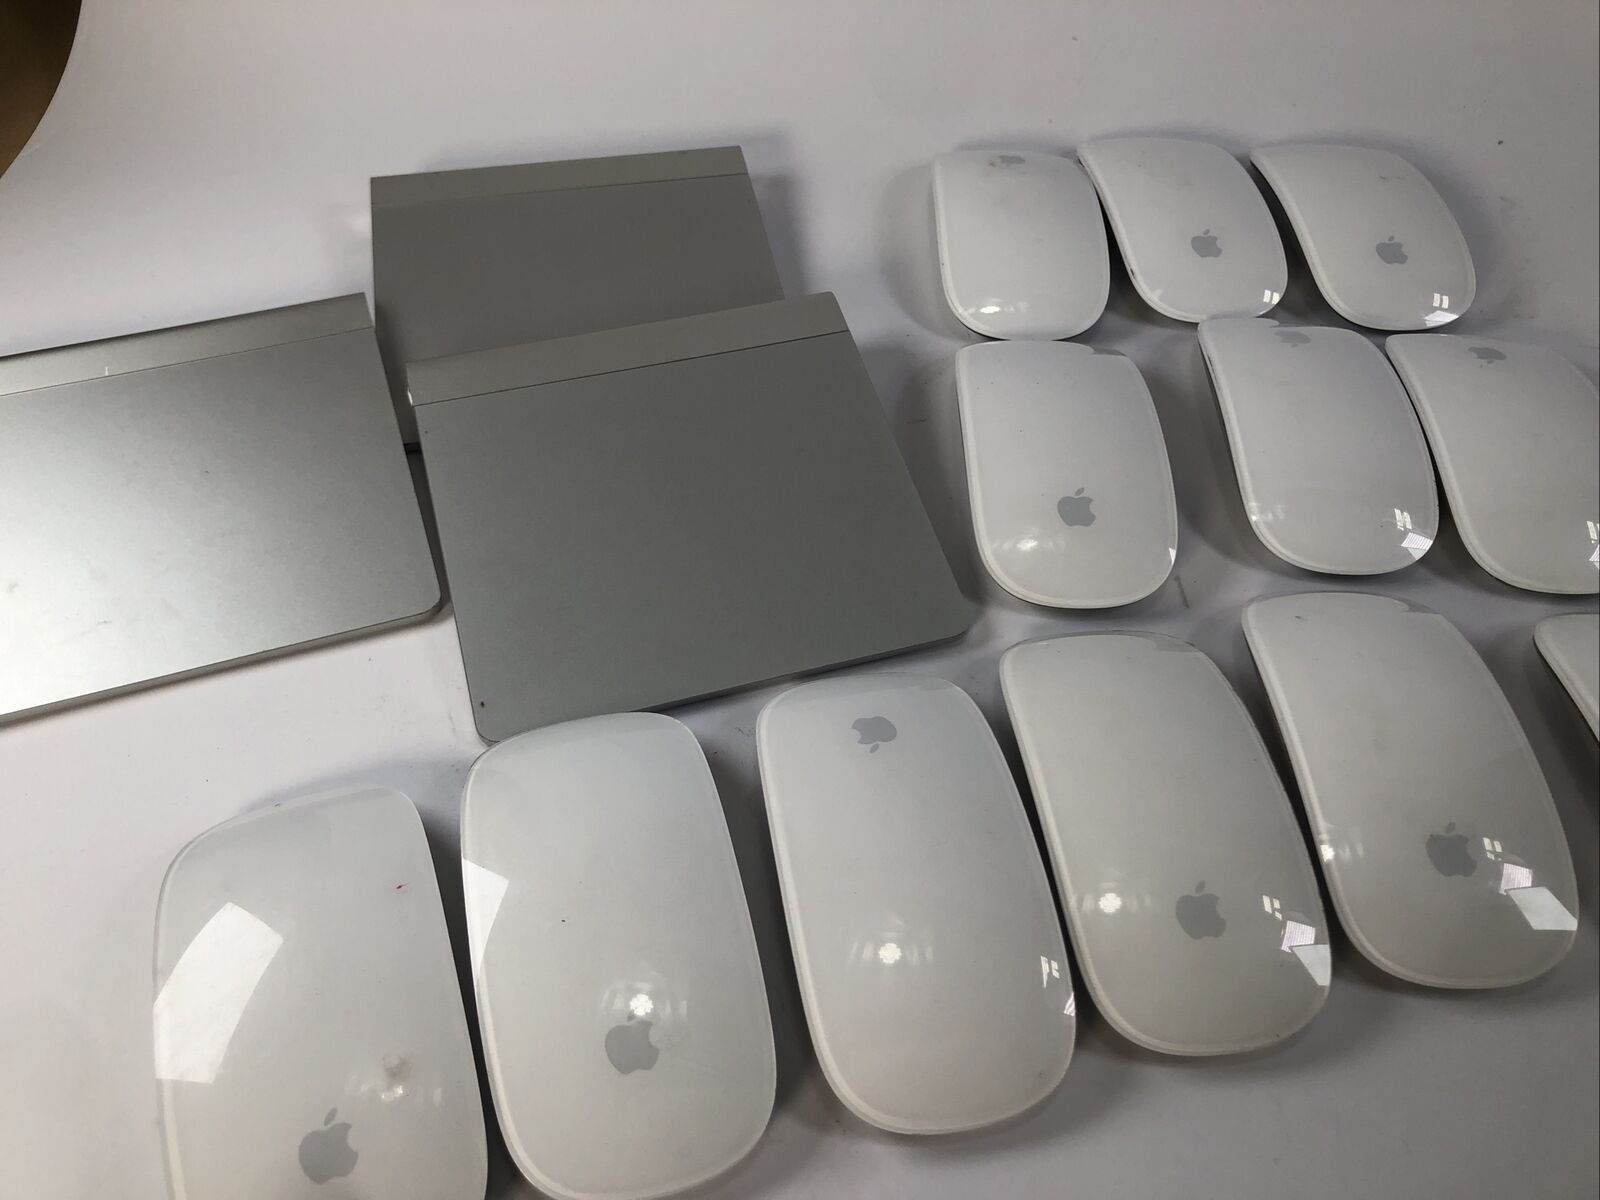 Lot of 15 - (12) Apple Magic Mouse Bluetooth A1296 + (3) Magic Trackpads A1339